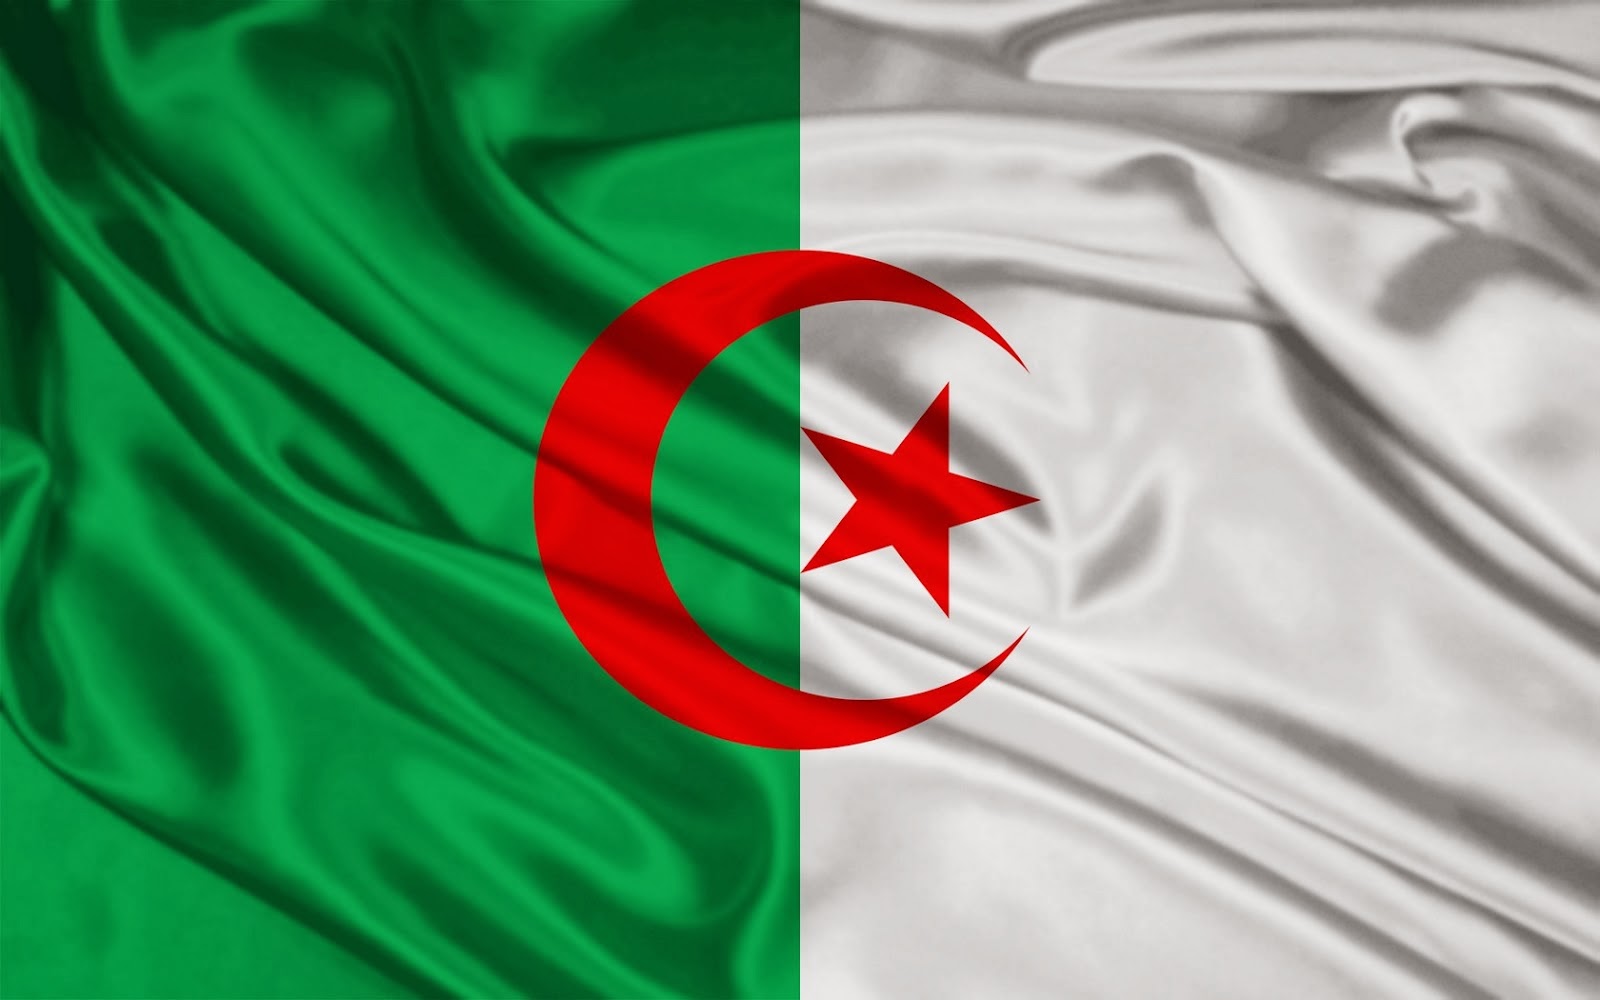 Discover Algeria on Twitter: Seraïdi, Annaba #Algérie # 